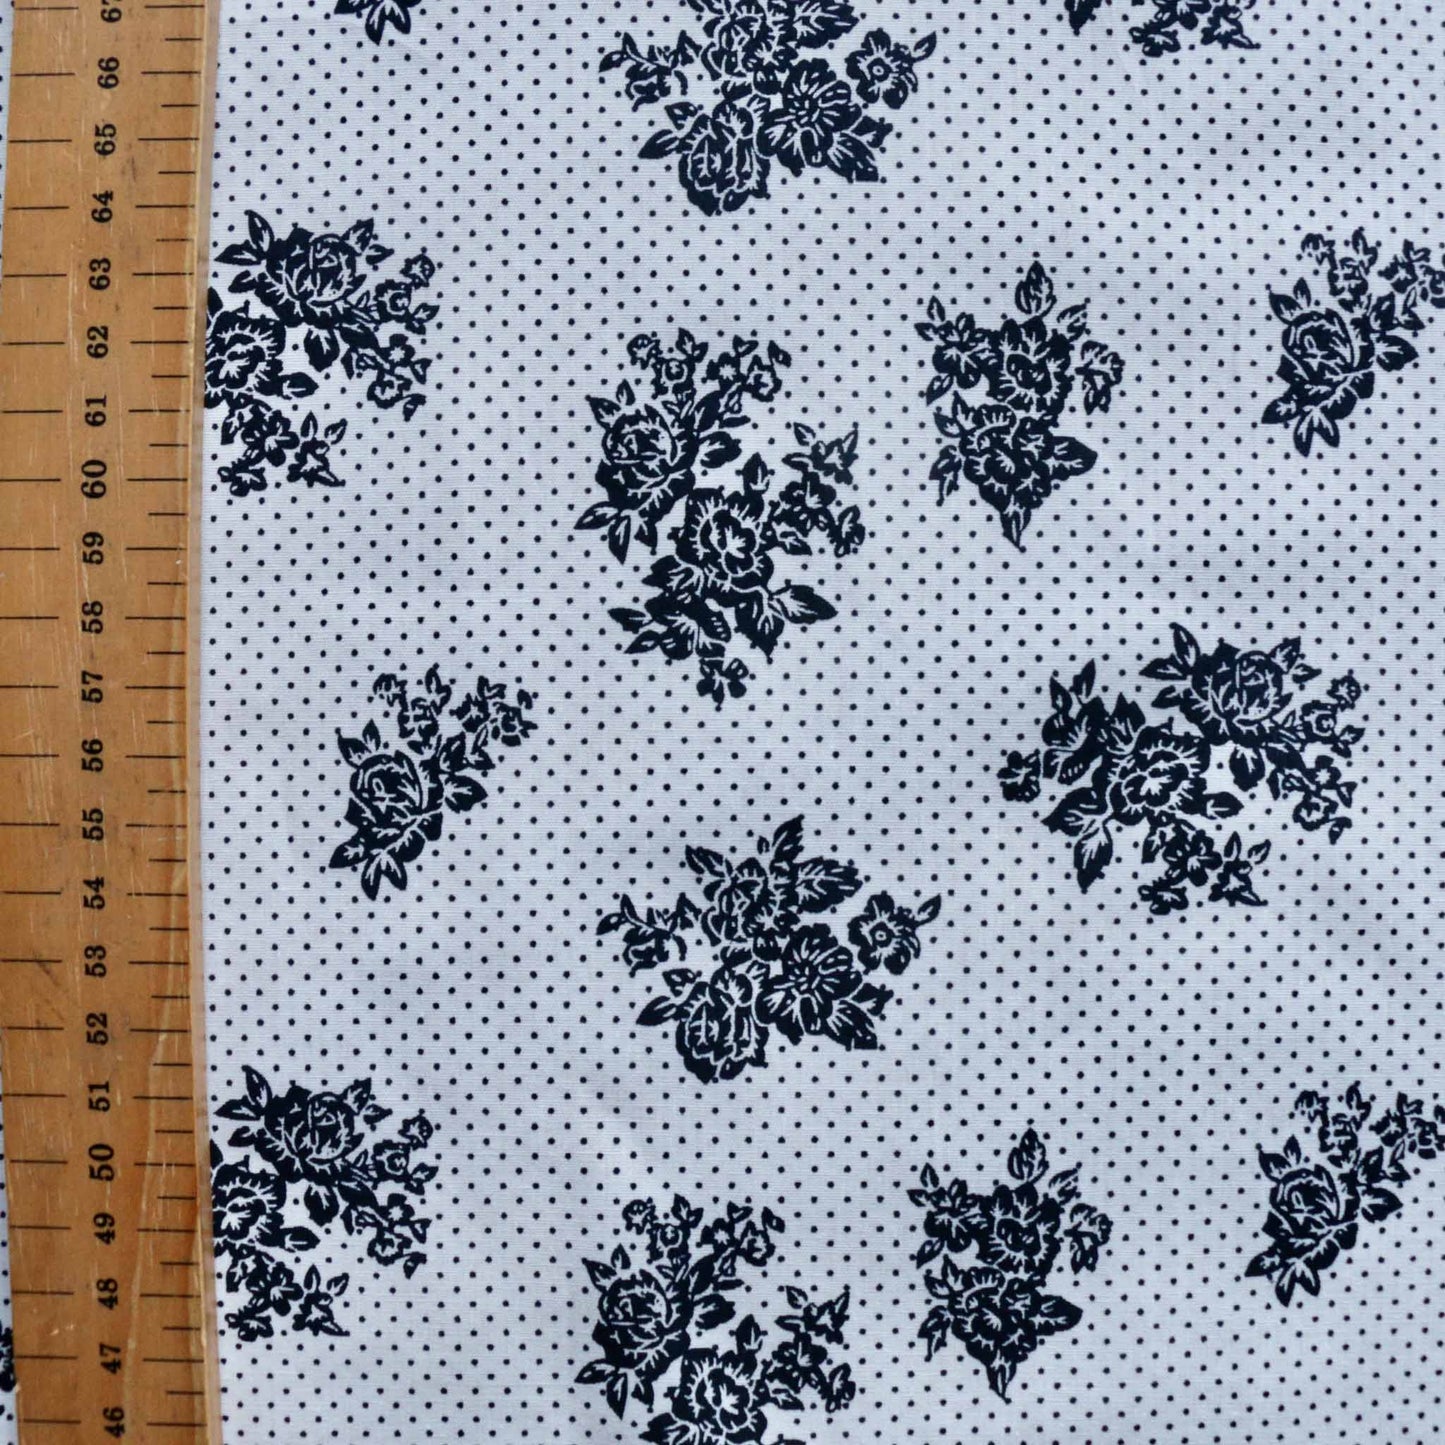 metre cotton poplin dressmaking fabric with navy flower and polka dot print